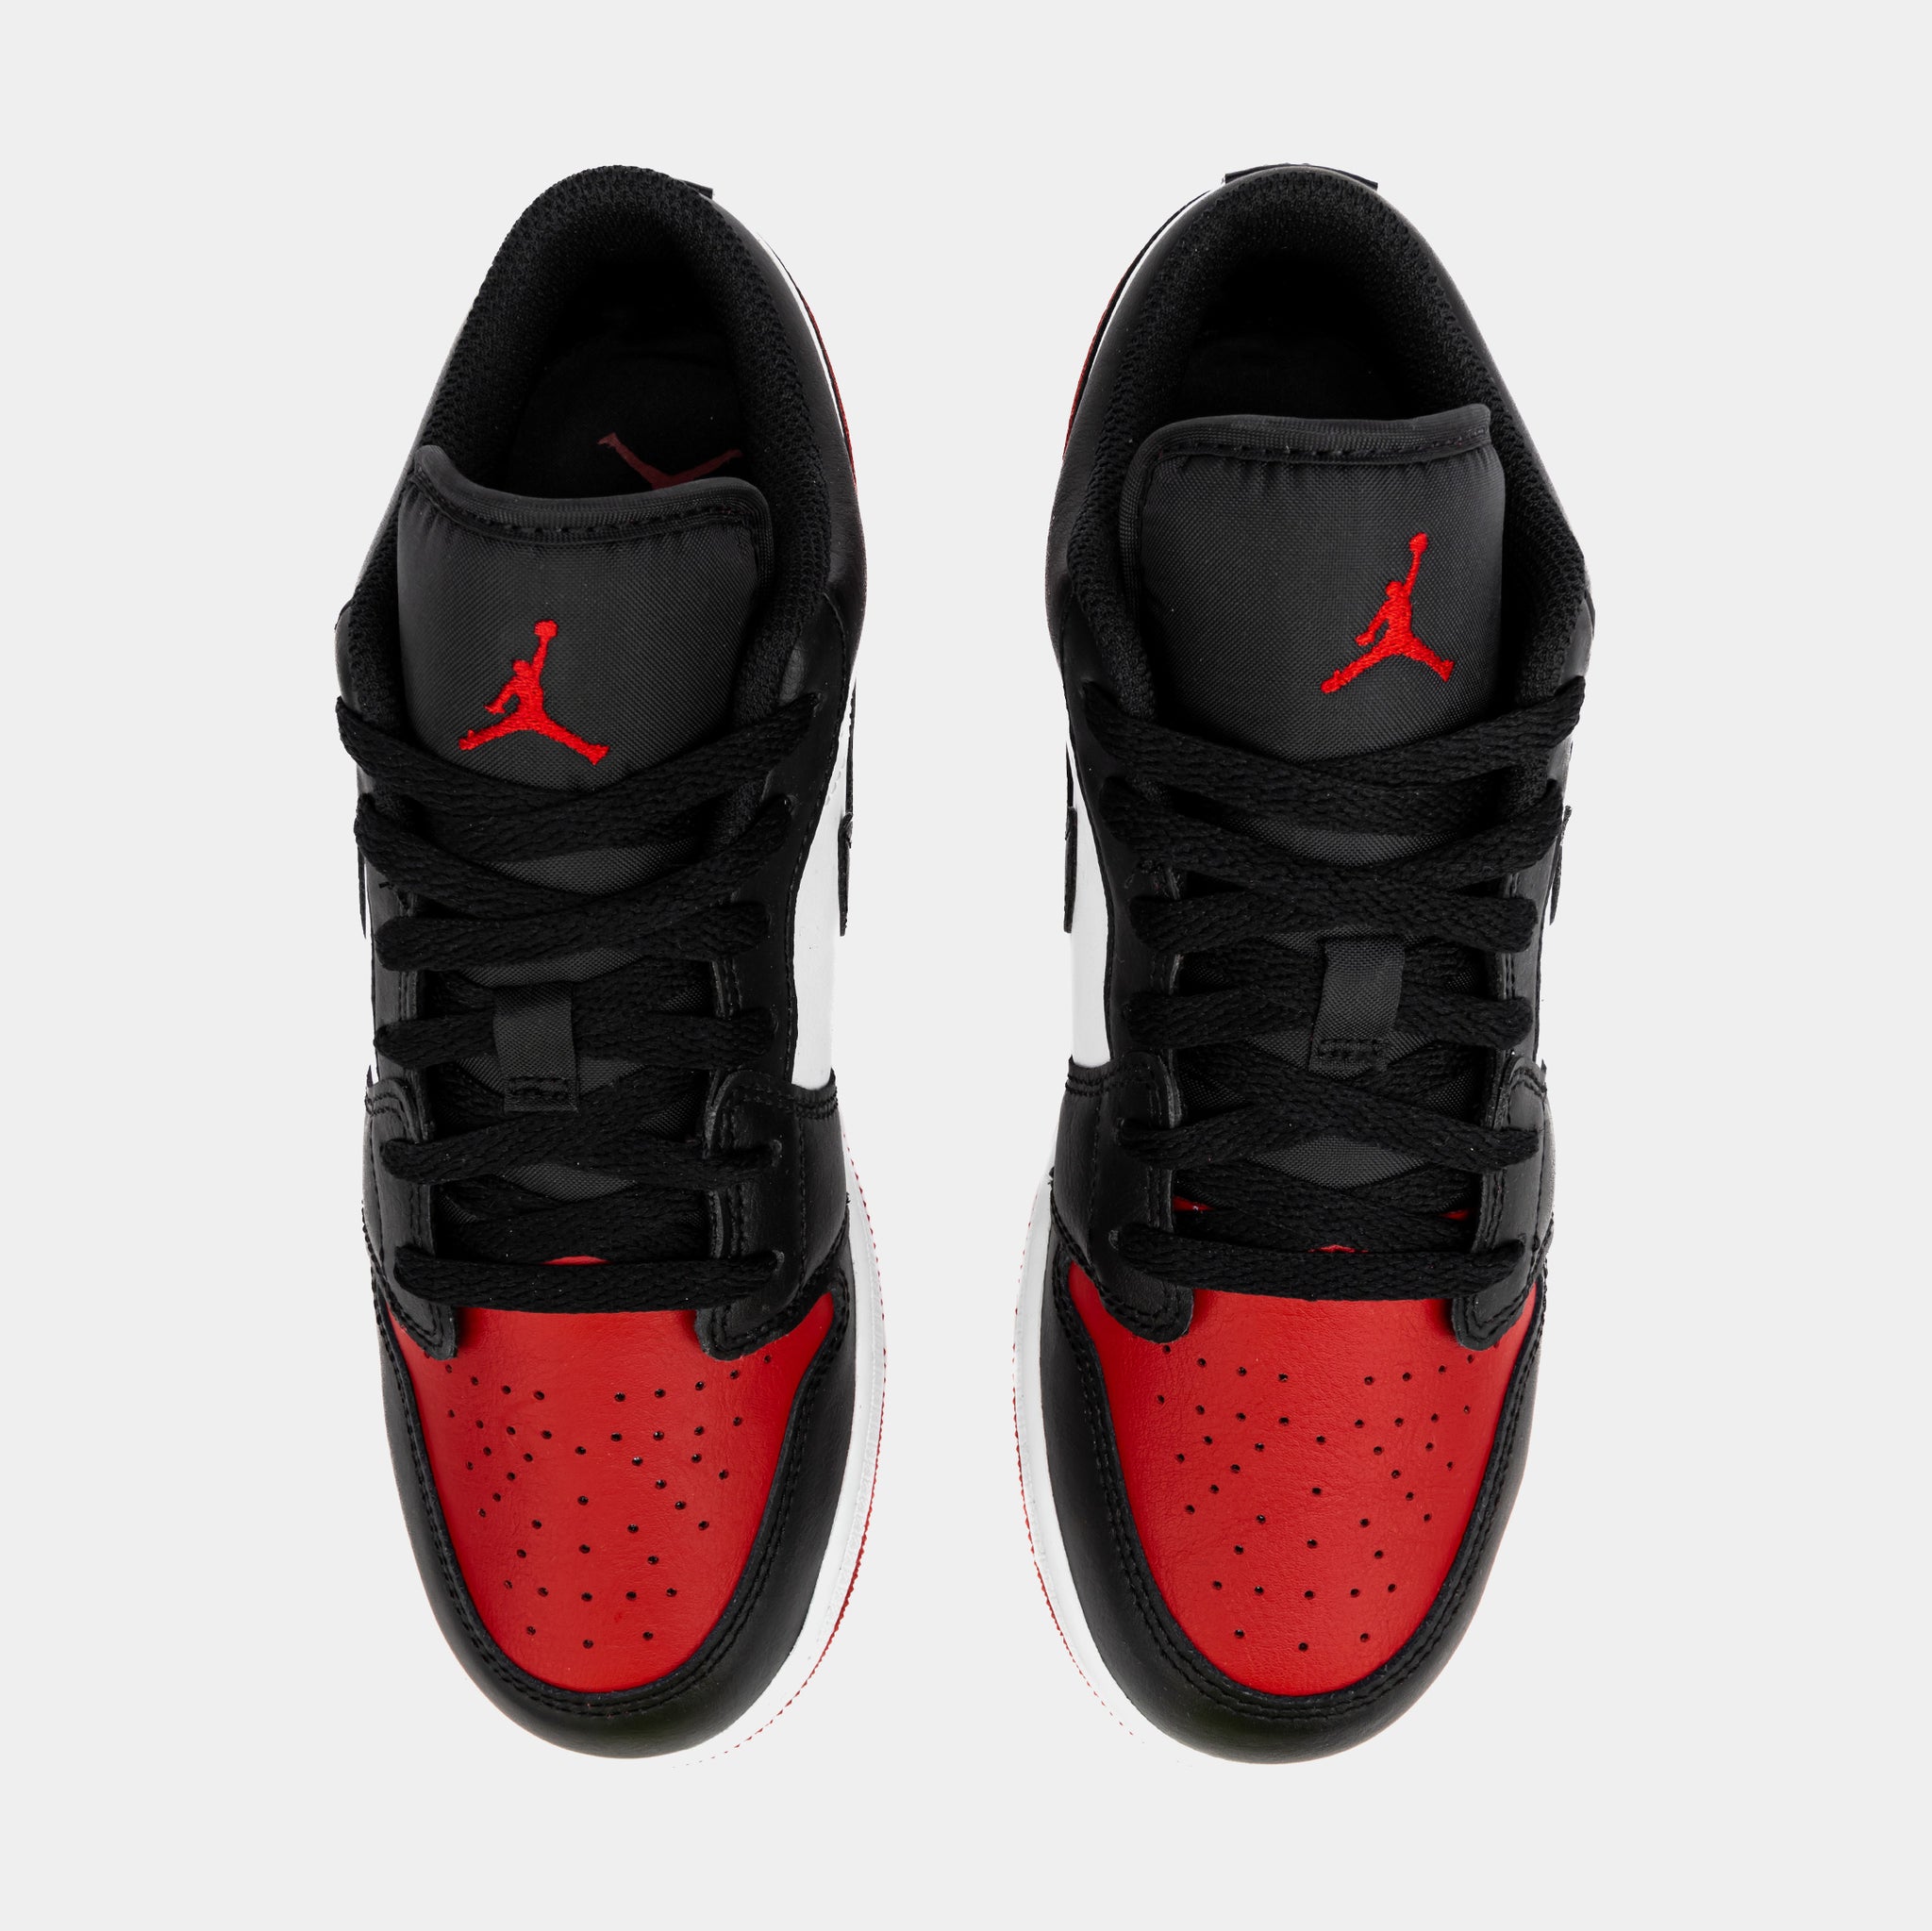 Jordan Air Jordan 1 Retro Low Bred Toe Grade School Lifestyle Shoes ...